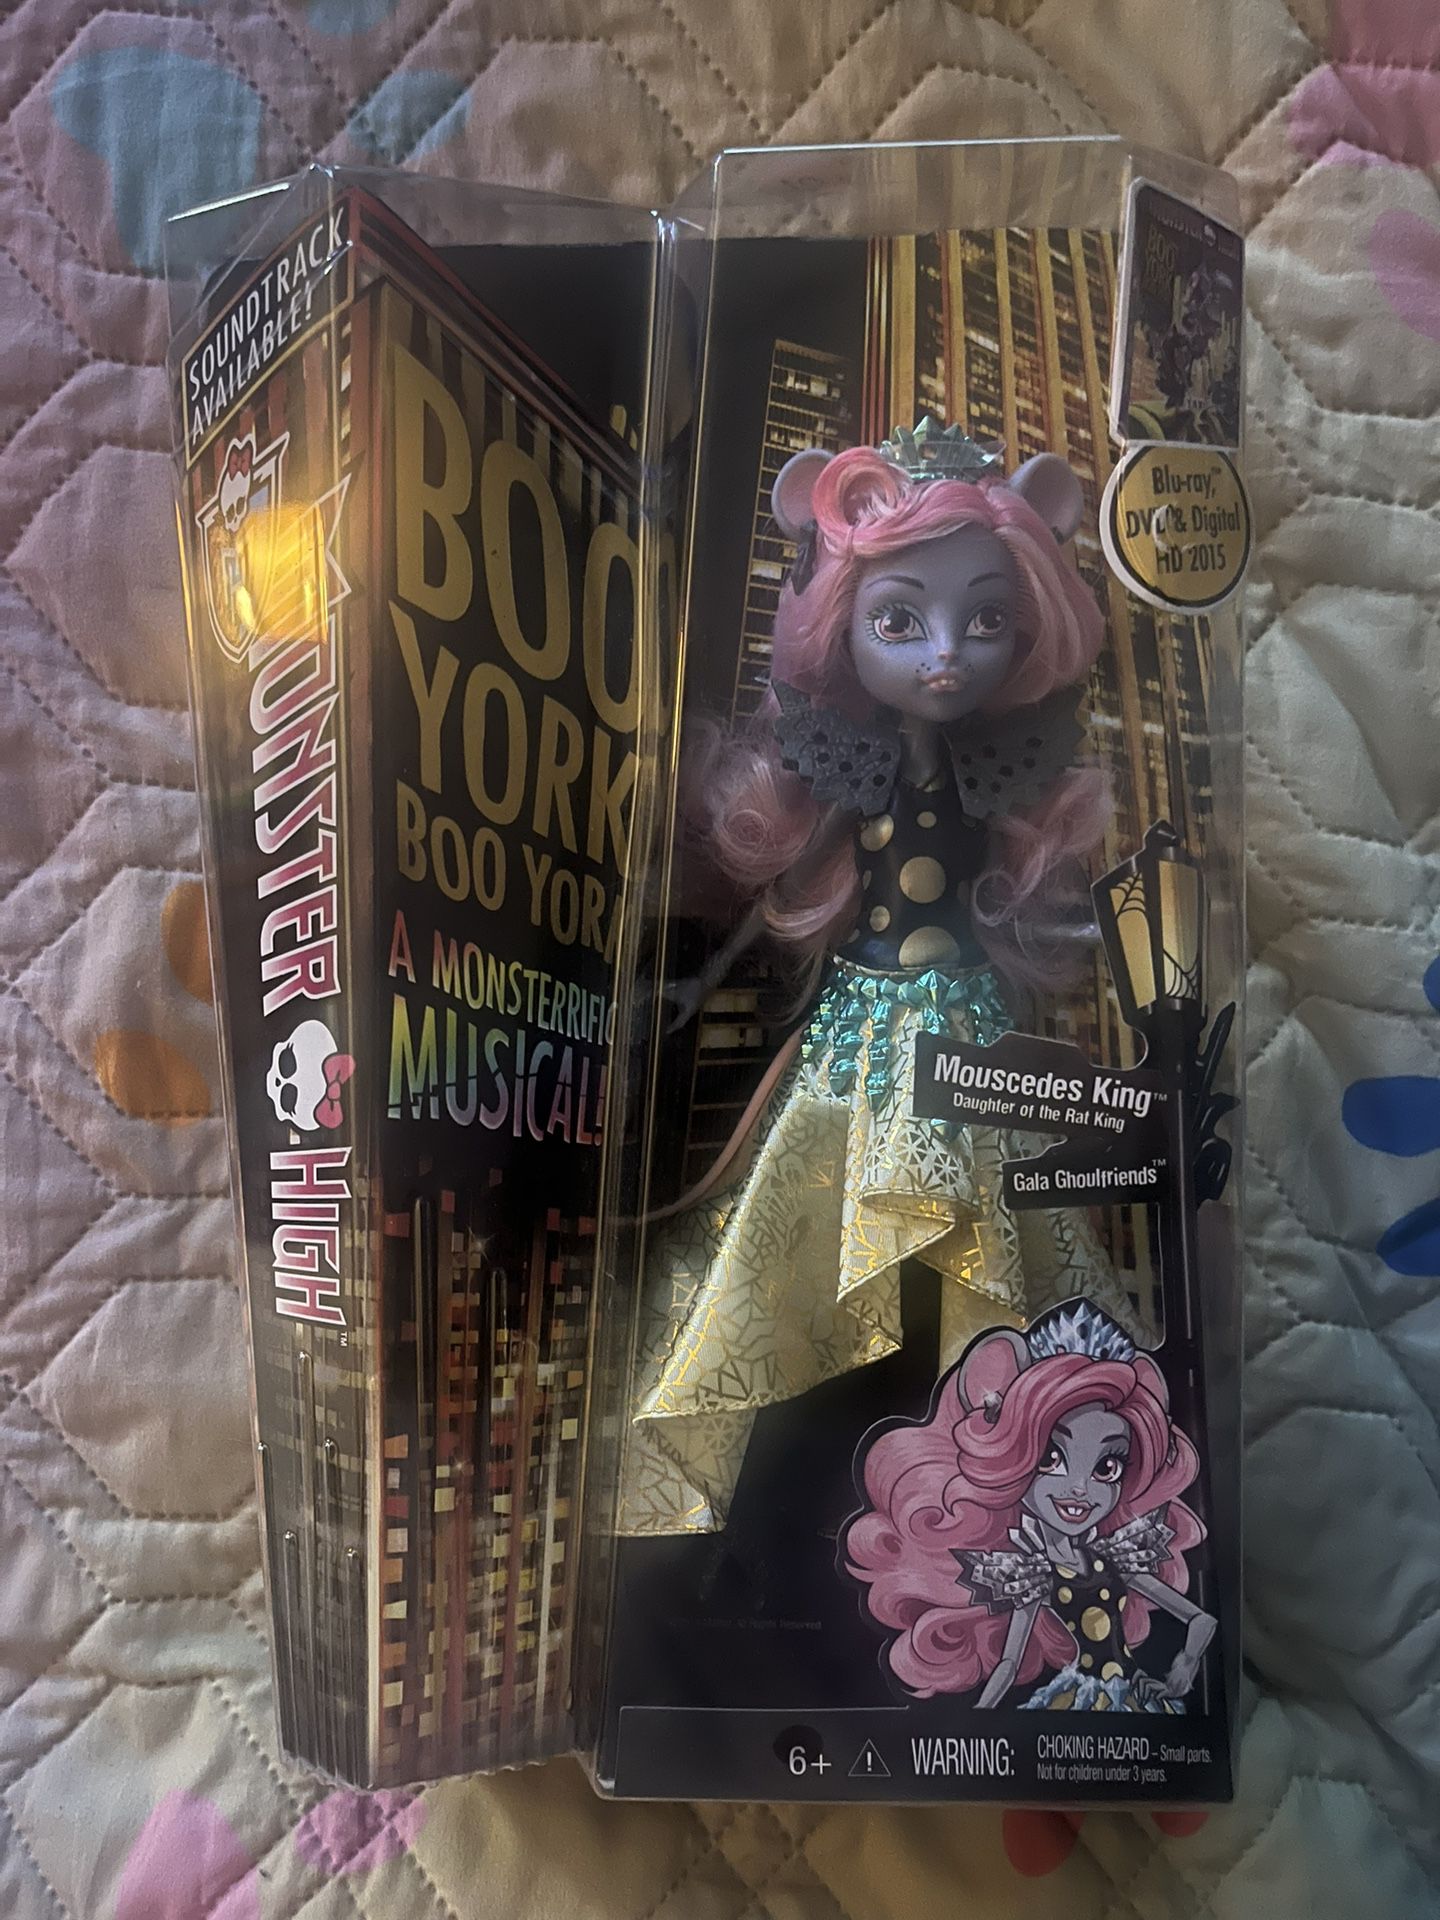 Monster High Mouscedes King Boo York Gala Ghoulfriends Rat-Mattel